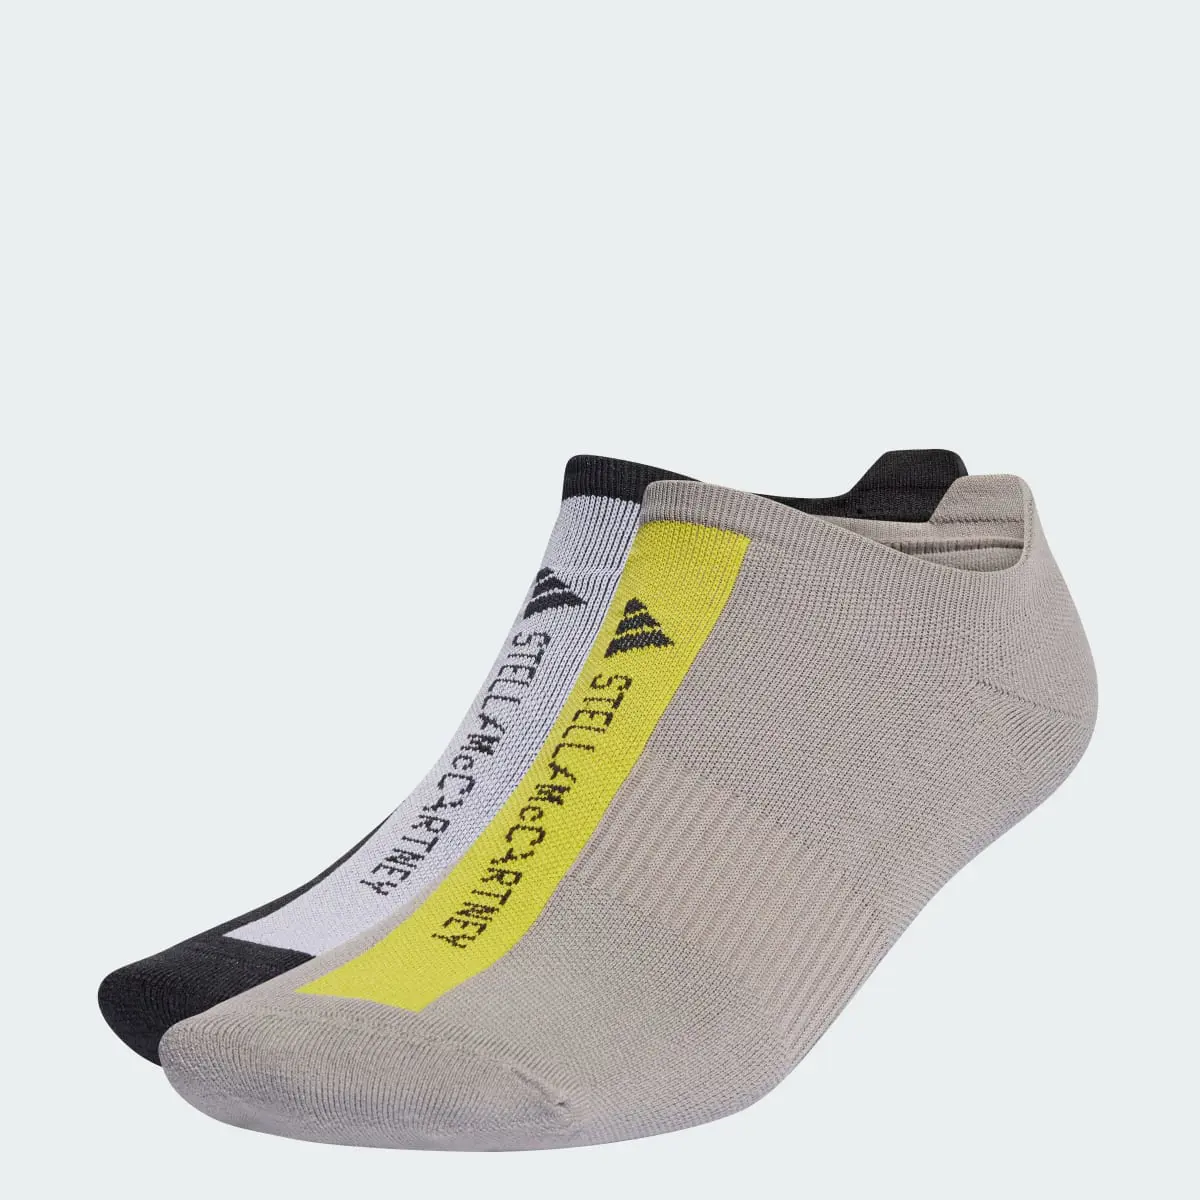 Adidas by Stella McCartney Low Socken. 2